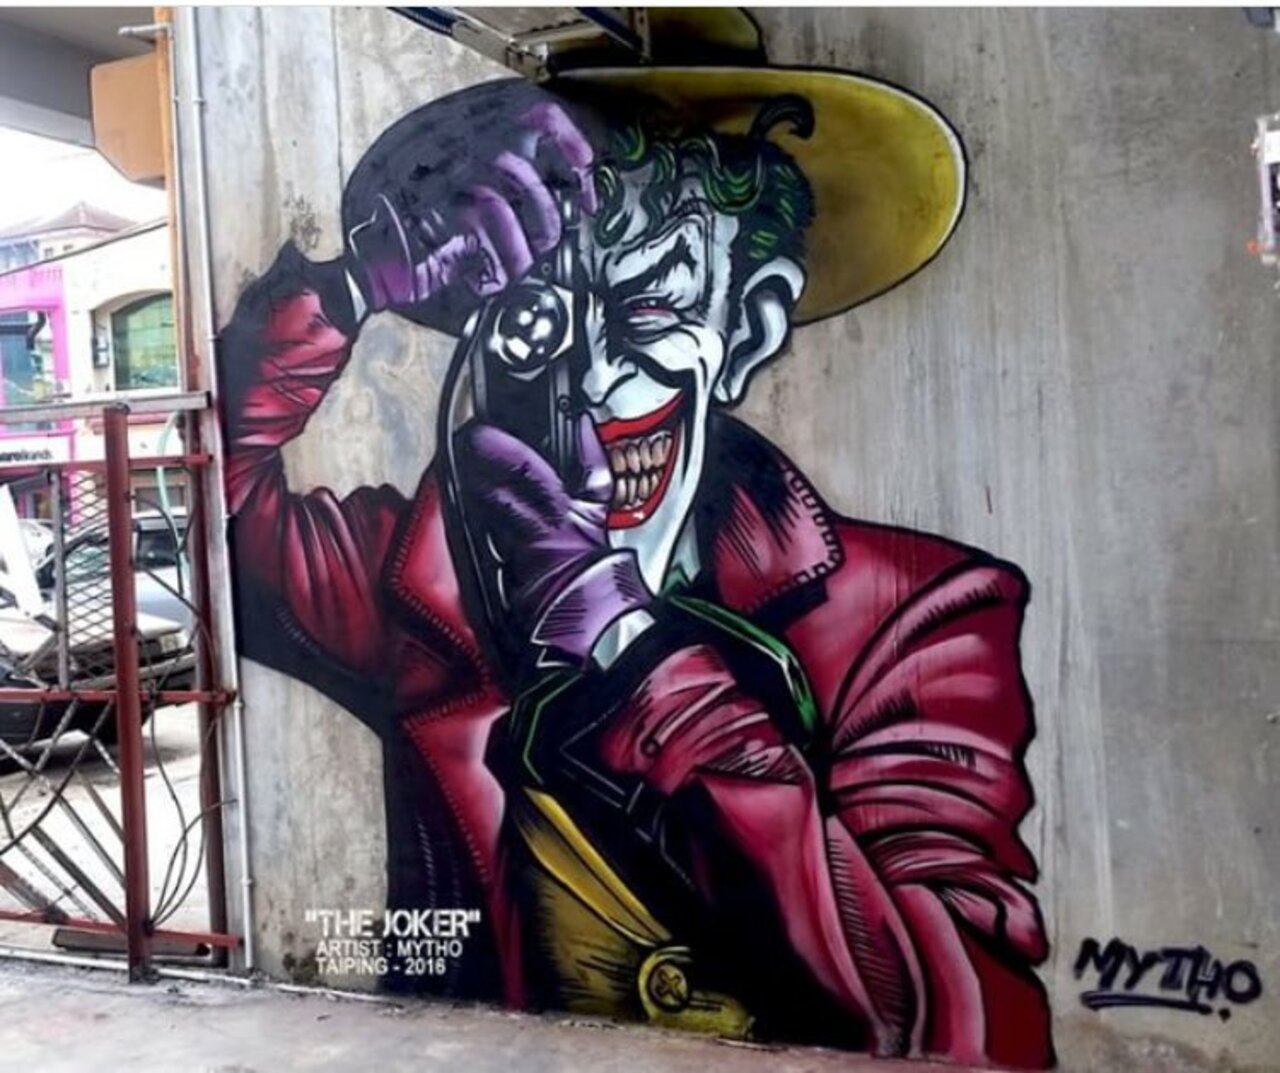 “The Killing Joke” New mural by mYth0 #streetart #graffiti #art #mural https://t.co/qY67QglZP2